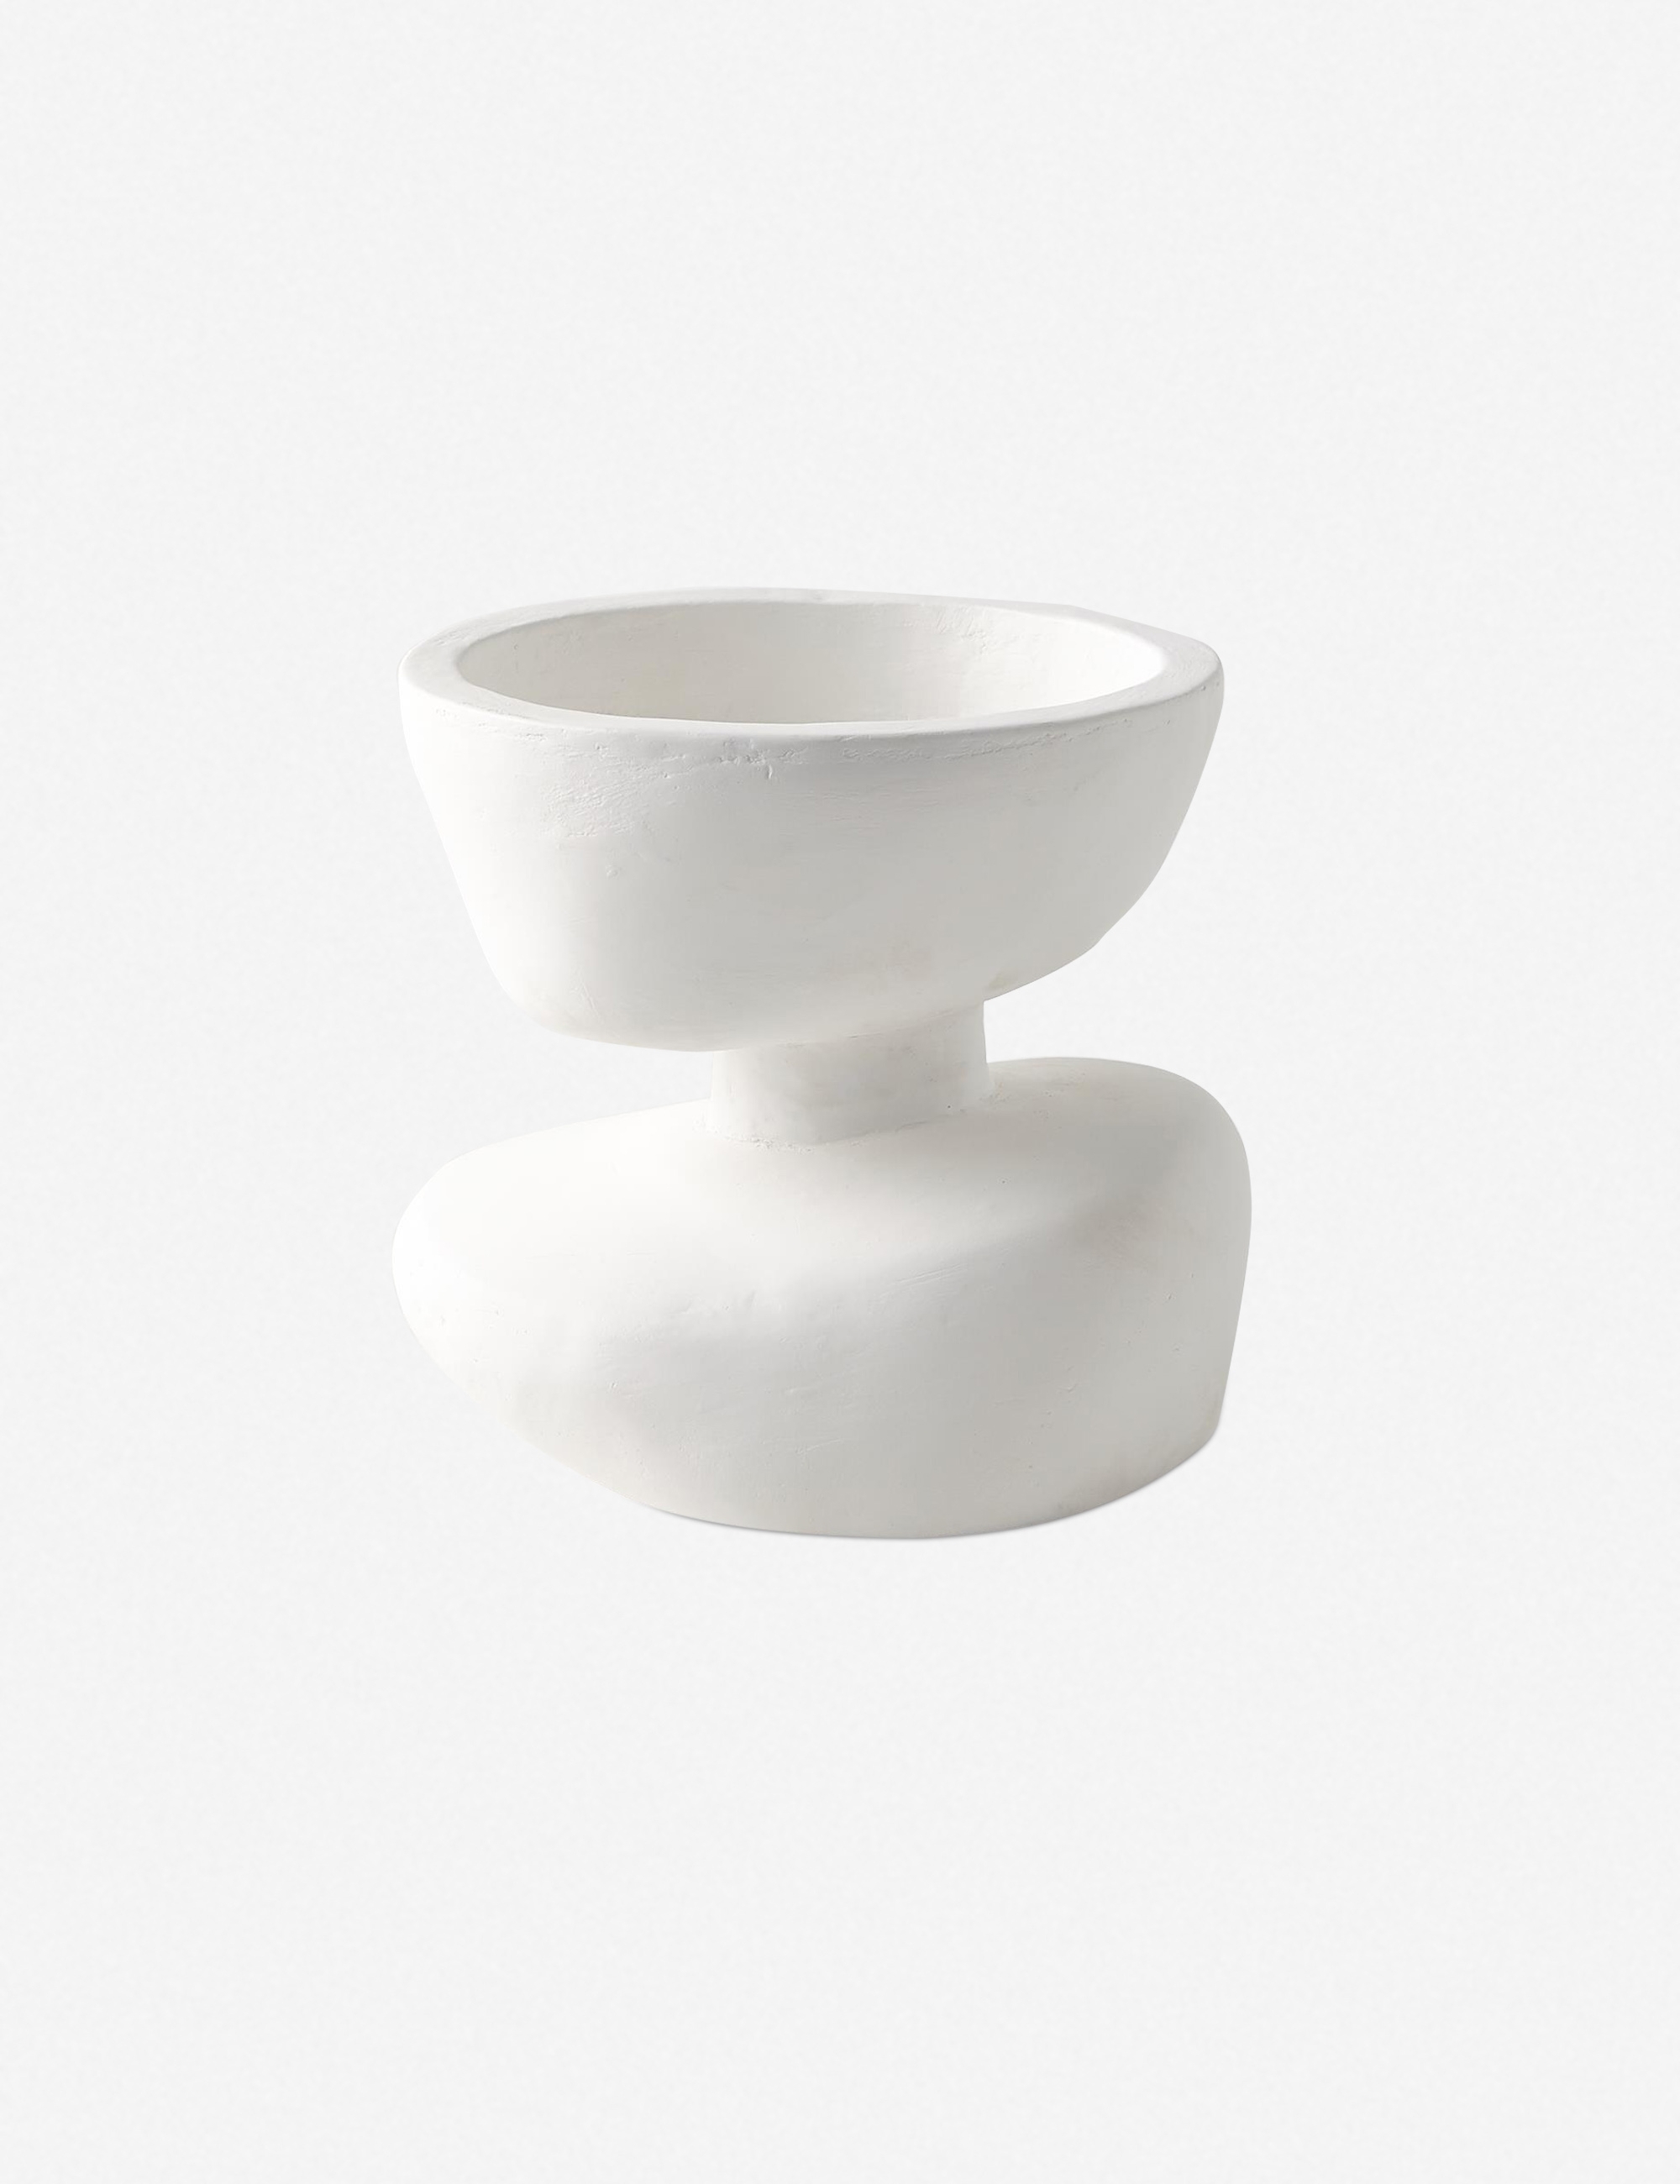 Lemieux et Cie Matili Small Organic Bowl, White - Image 0